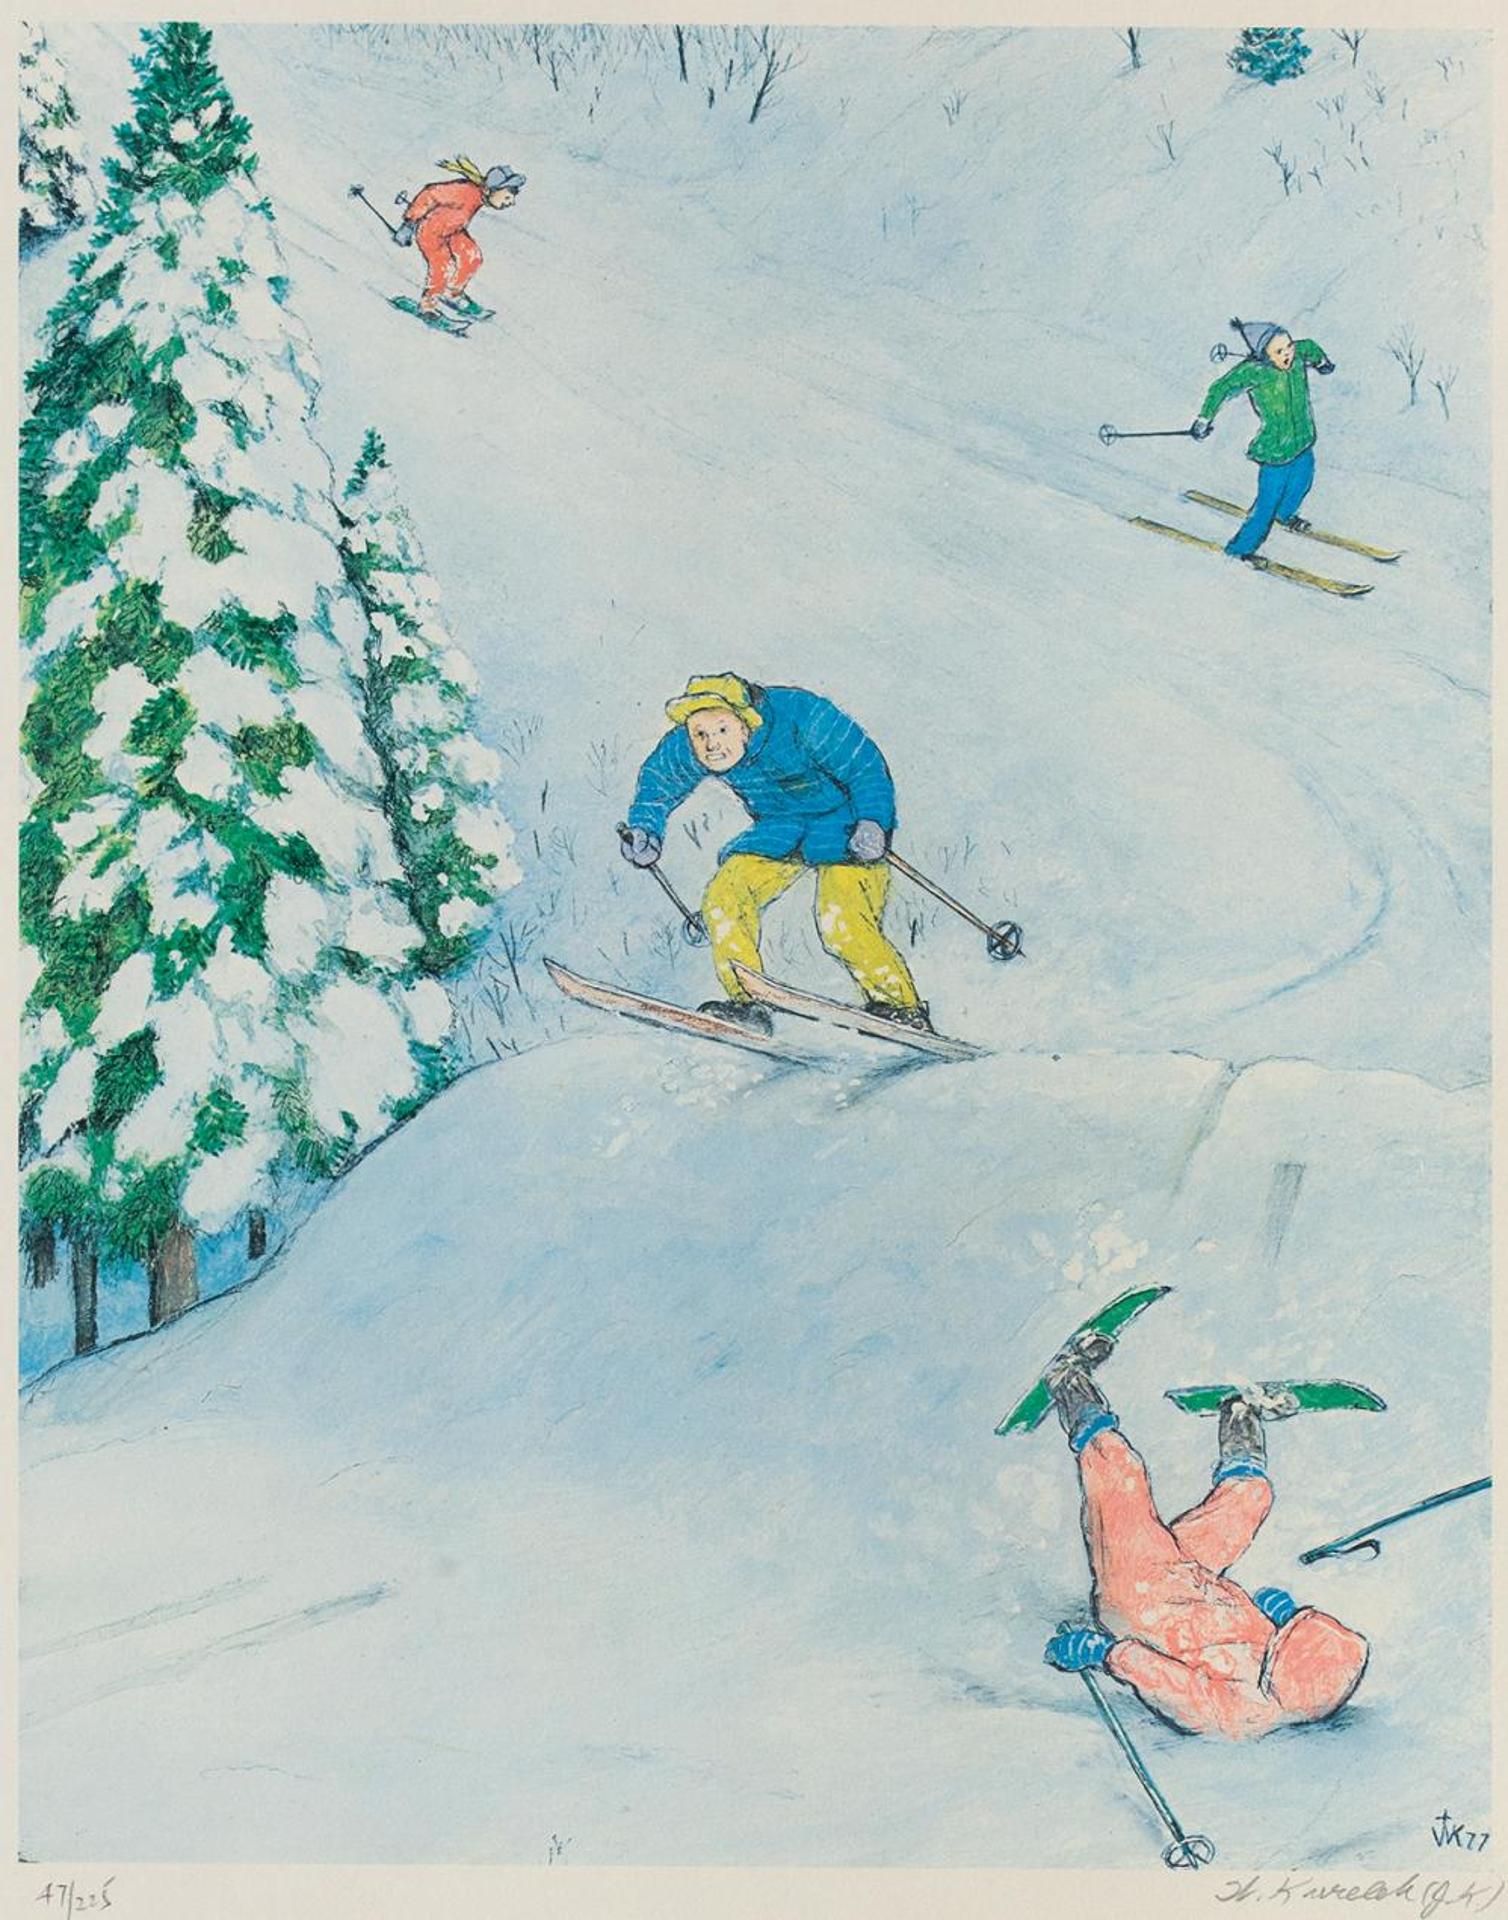 William Kurelek (1927-1977) - Skiing